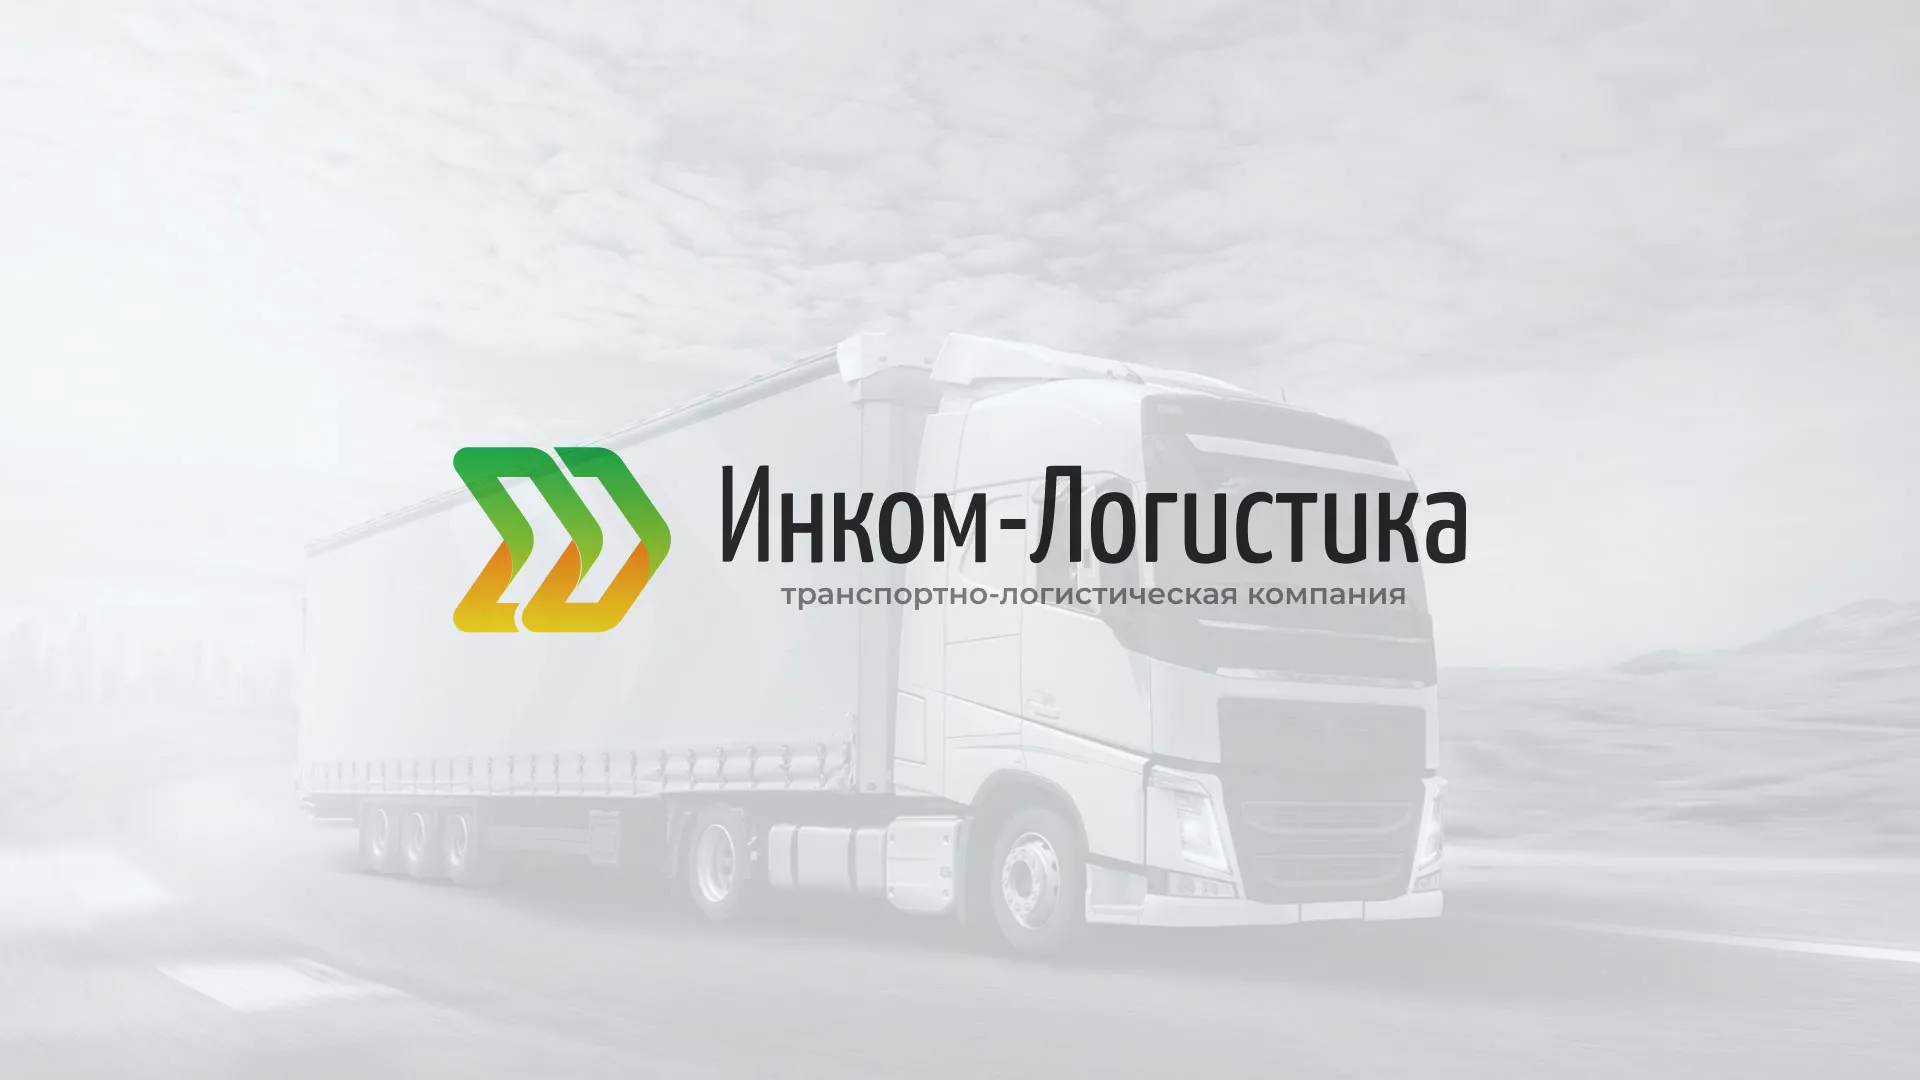 Разработка логотипа и сайта компании «Инком-Логистика» в Зернограде